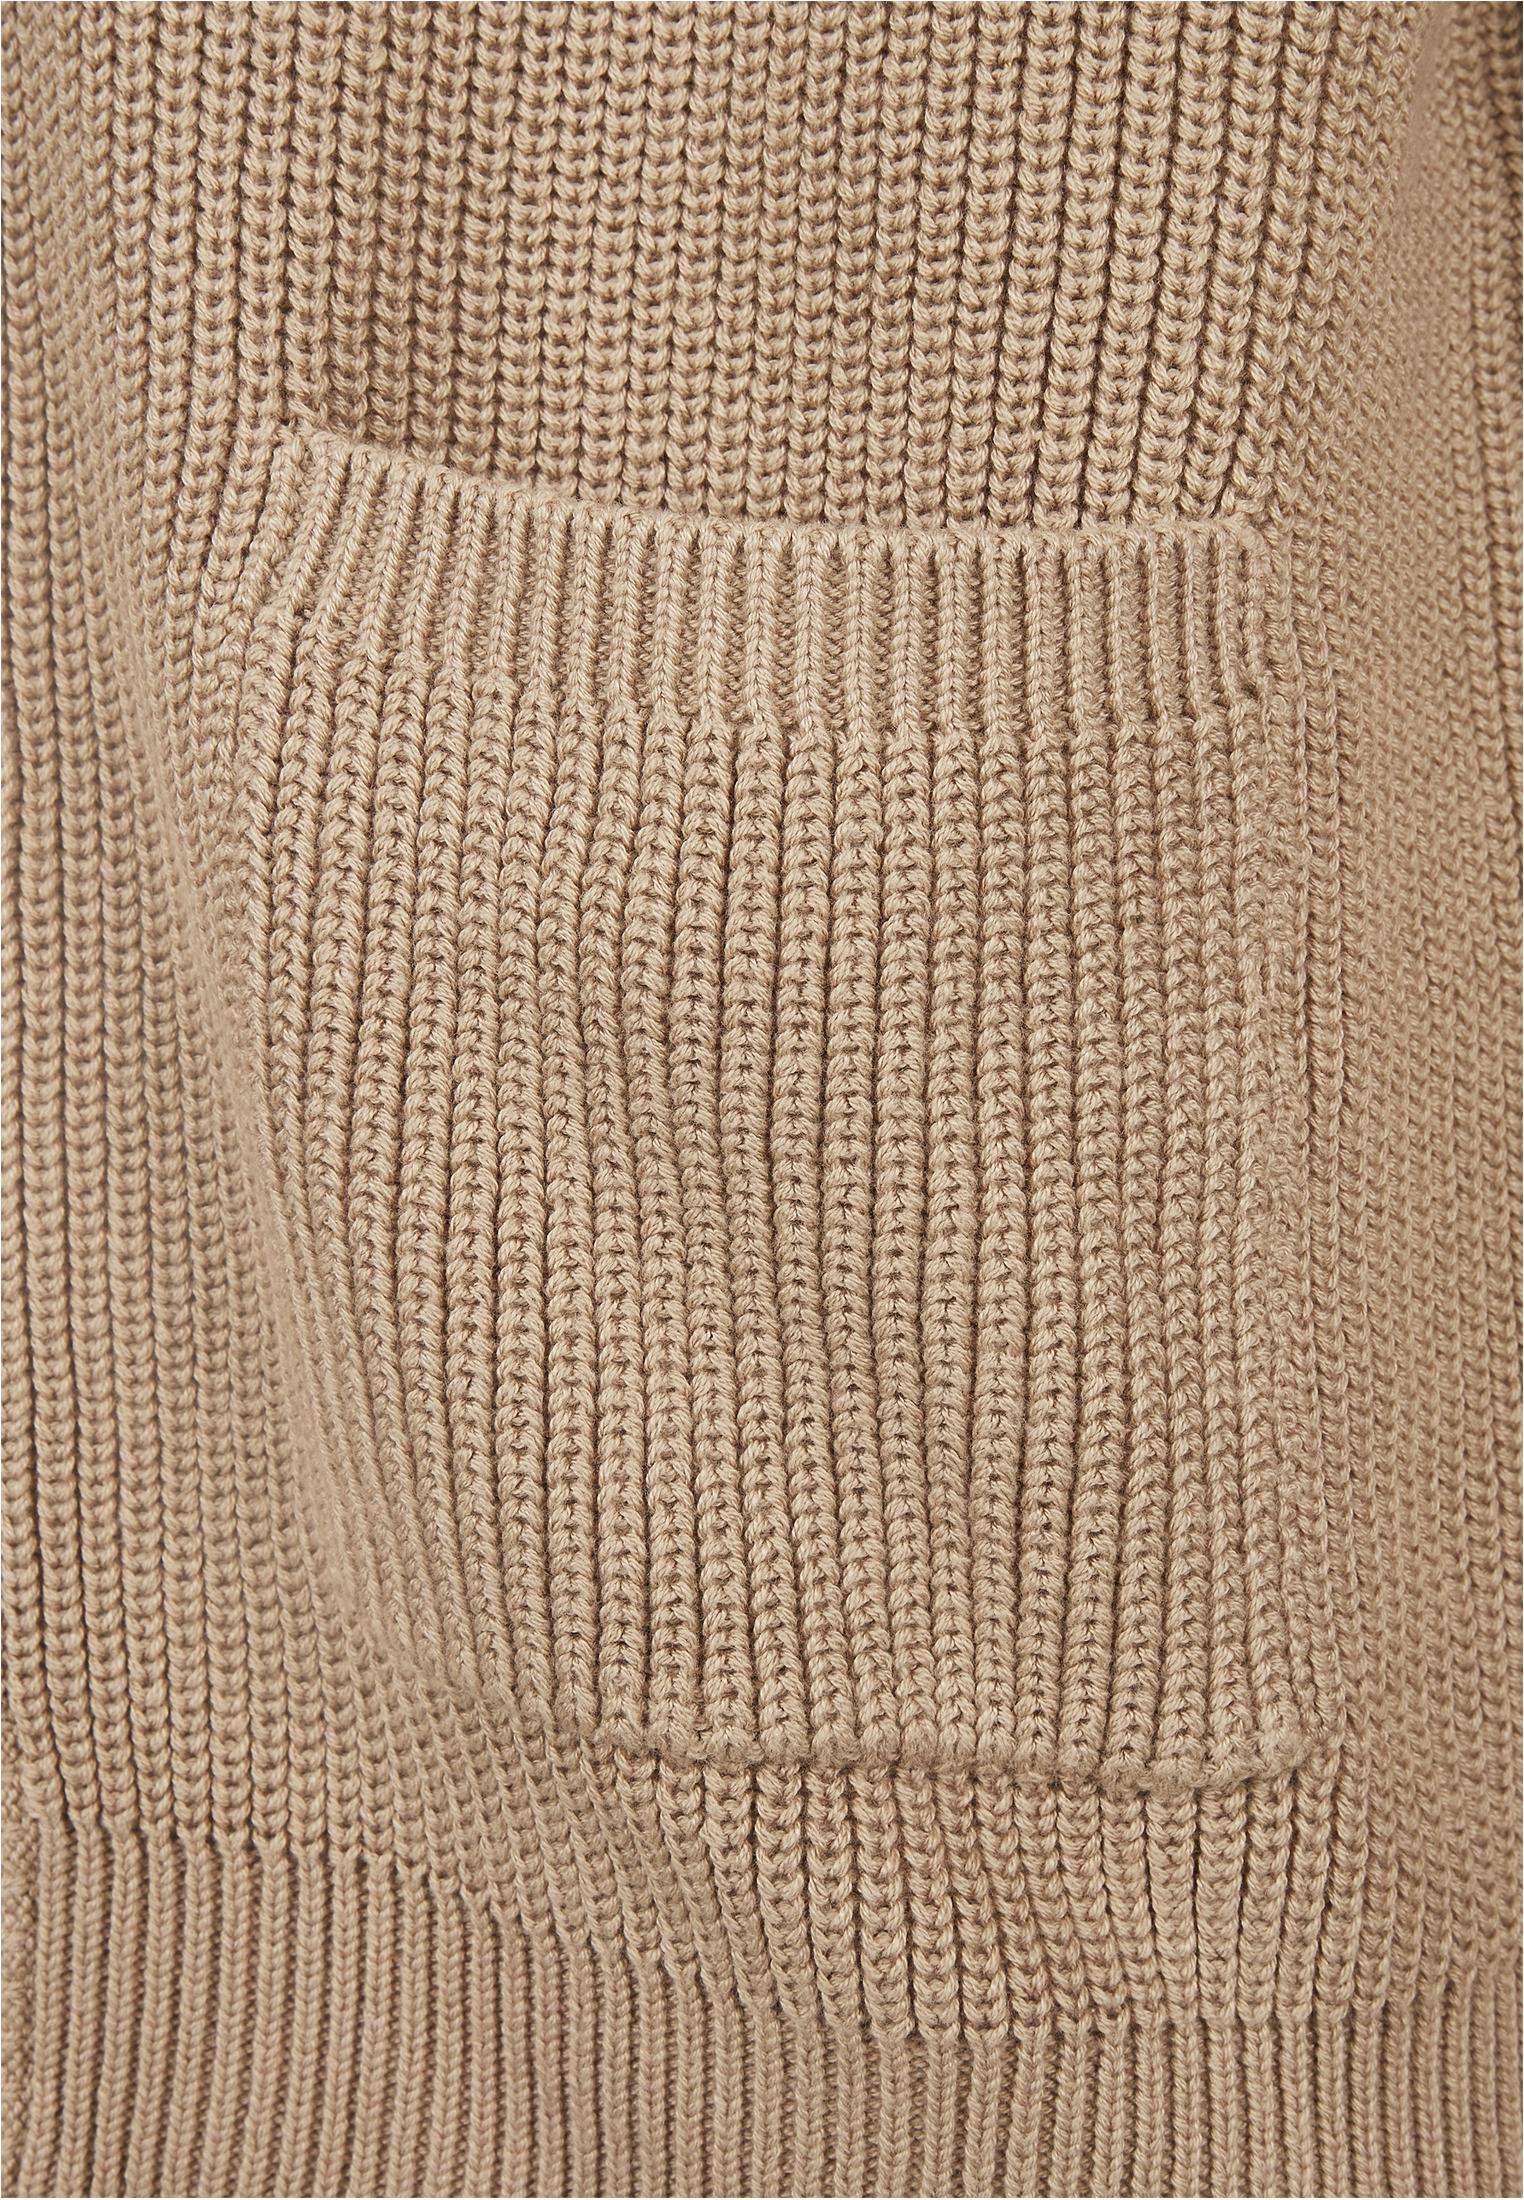 UC Men Boxy Cardigan (Farbe: warm sand / Größe: S)